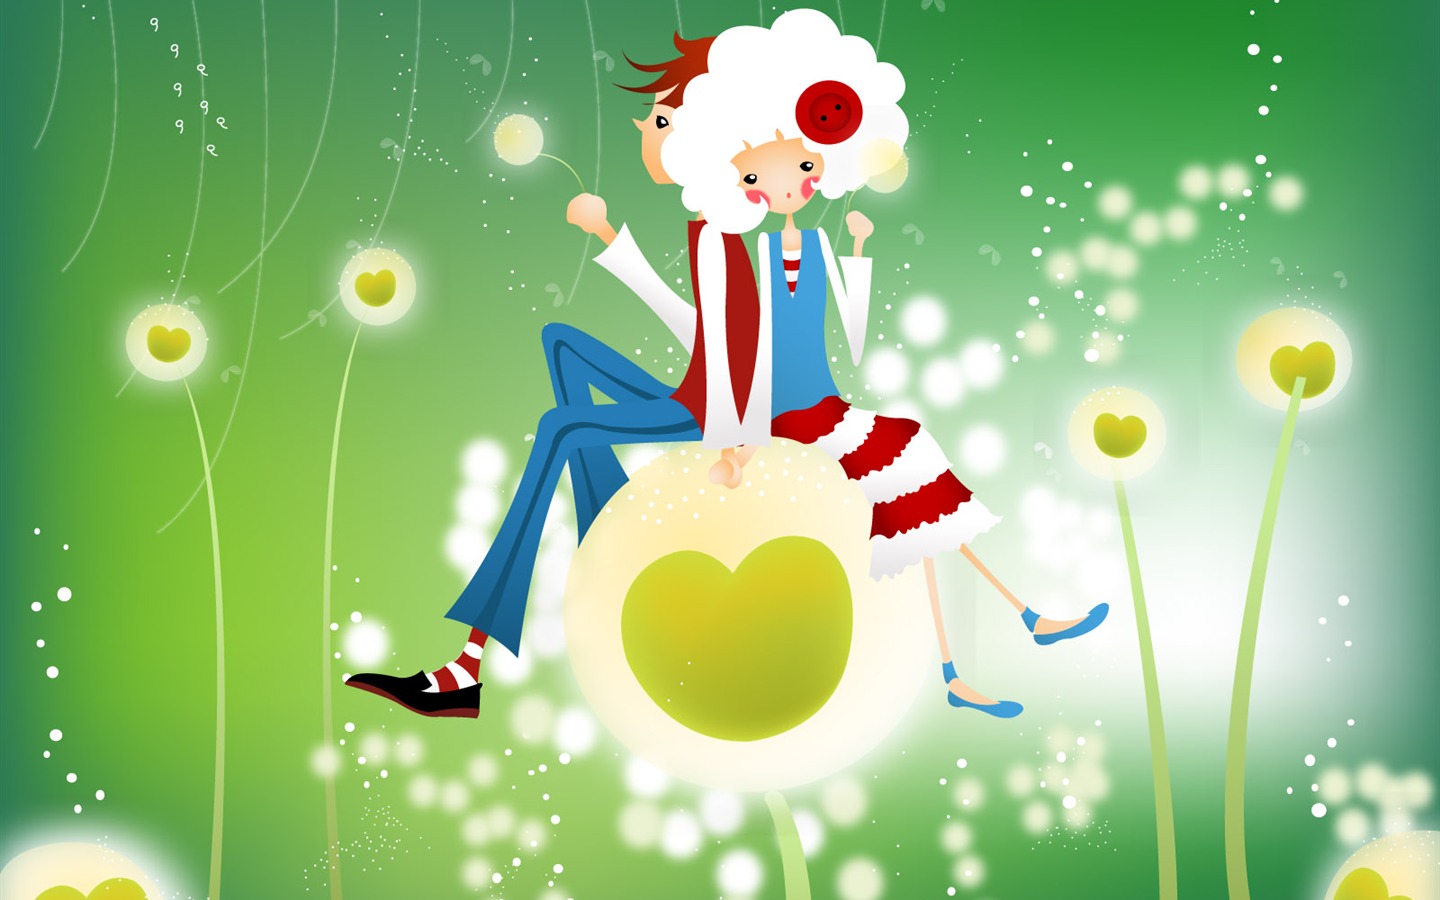 Button girl wallpaper illustrator #1 - 1440x900